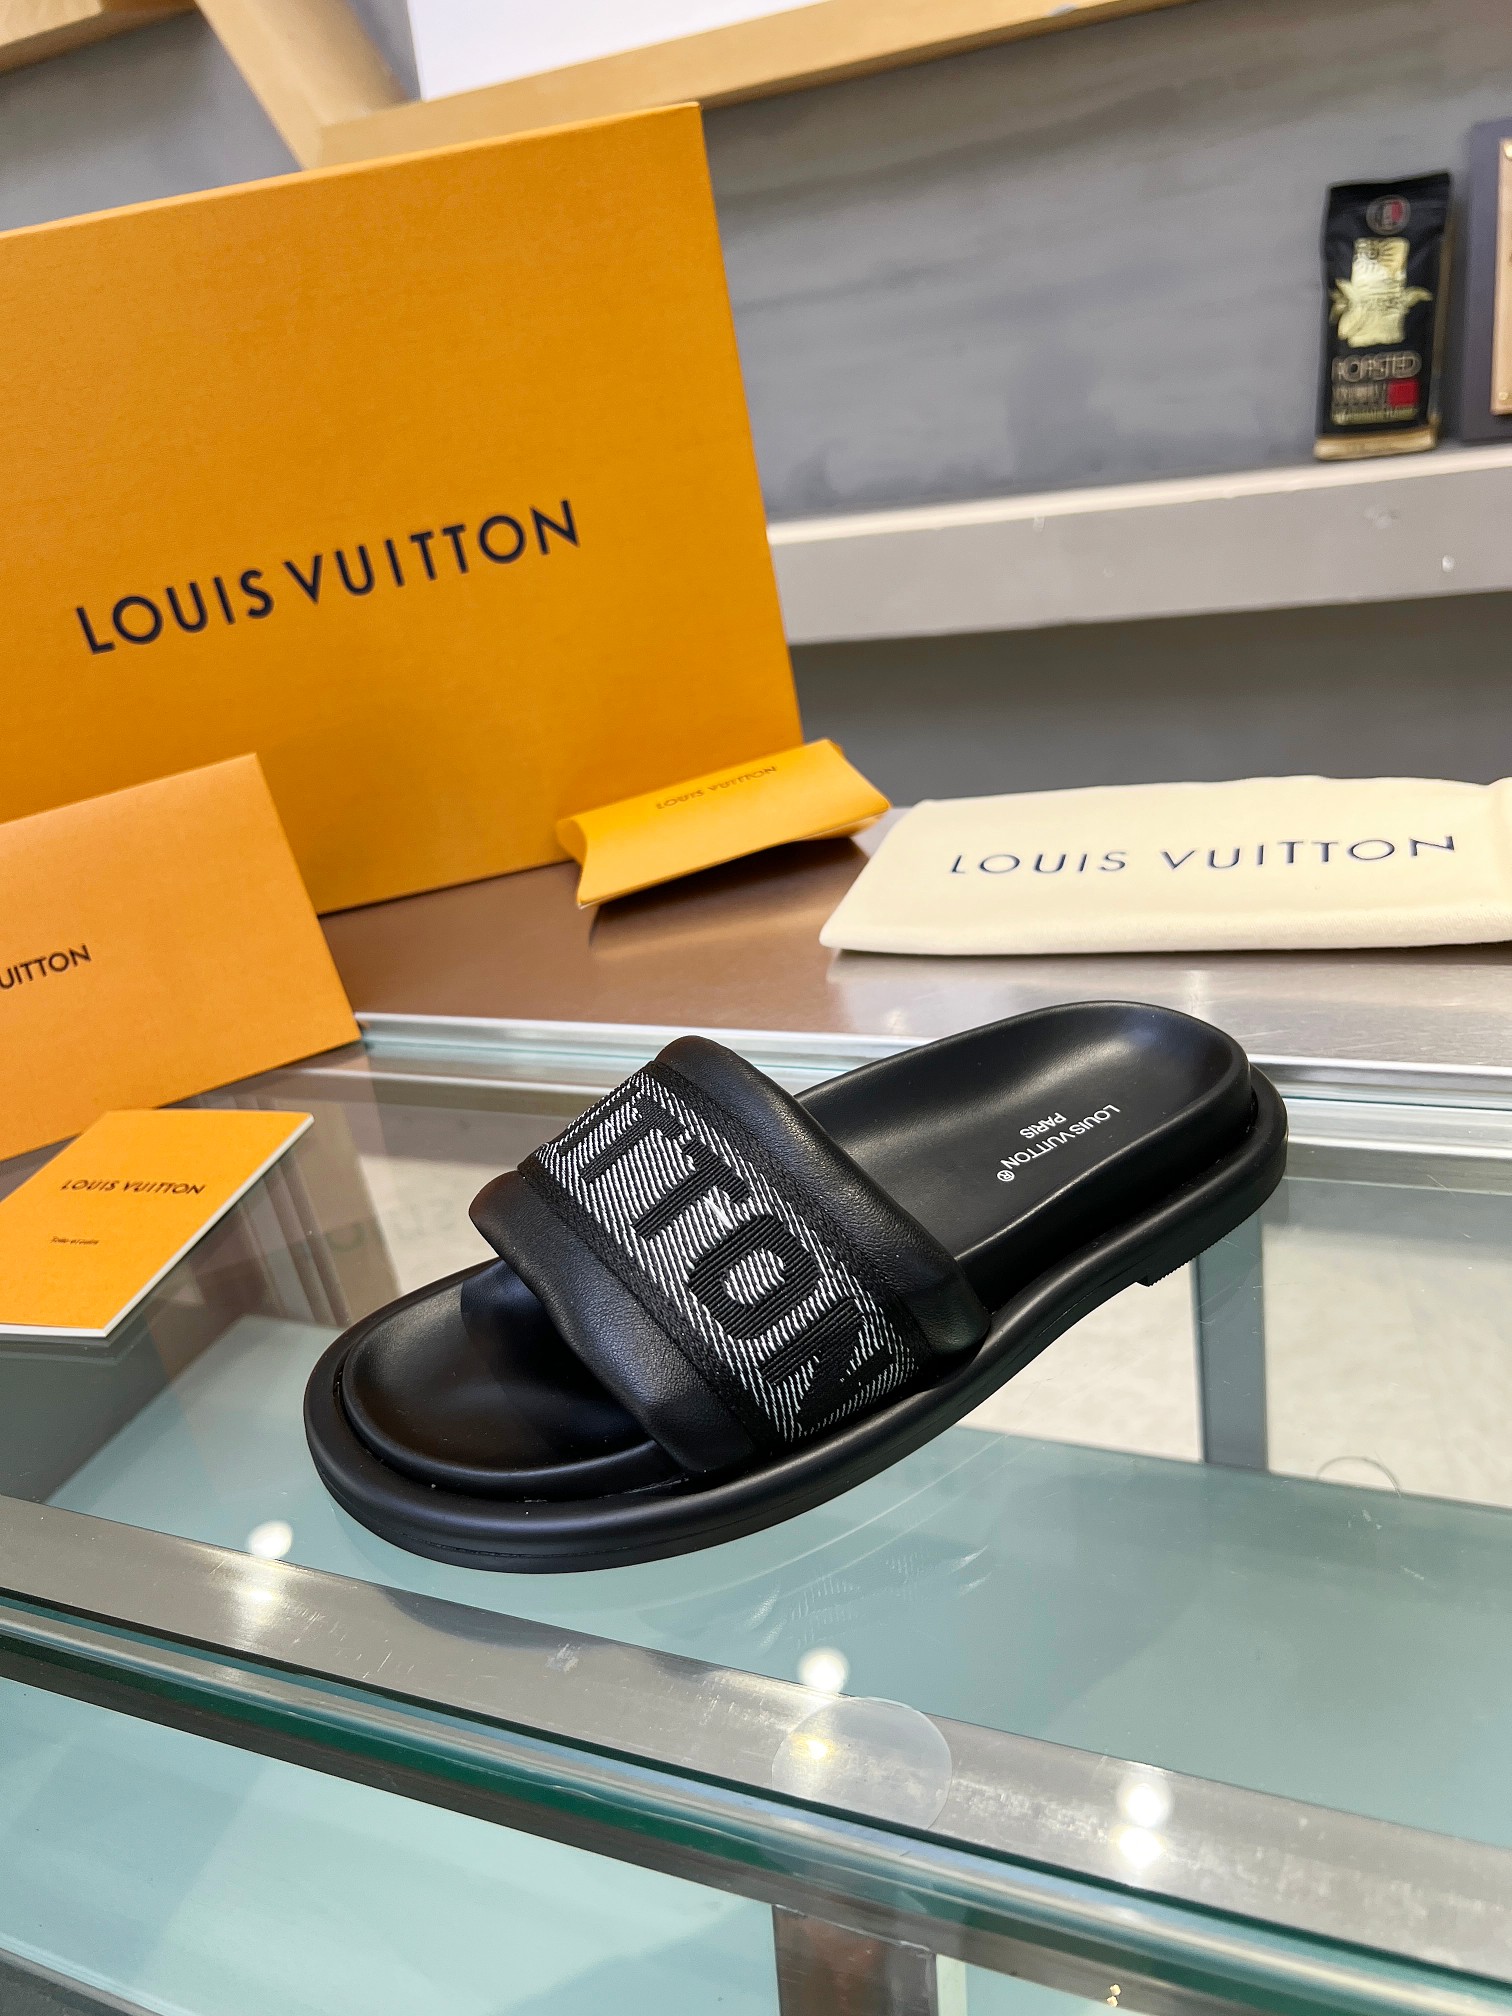 Louis Vuitton Scarpe Sandali Pantofole Beige Nero Grigio Bianco Unisex Pelle di pecora Fashion Casual